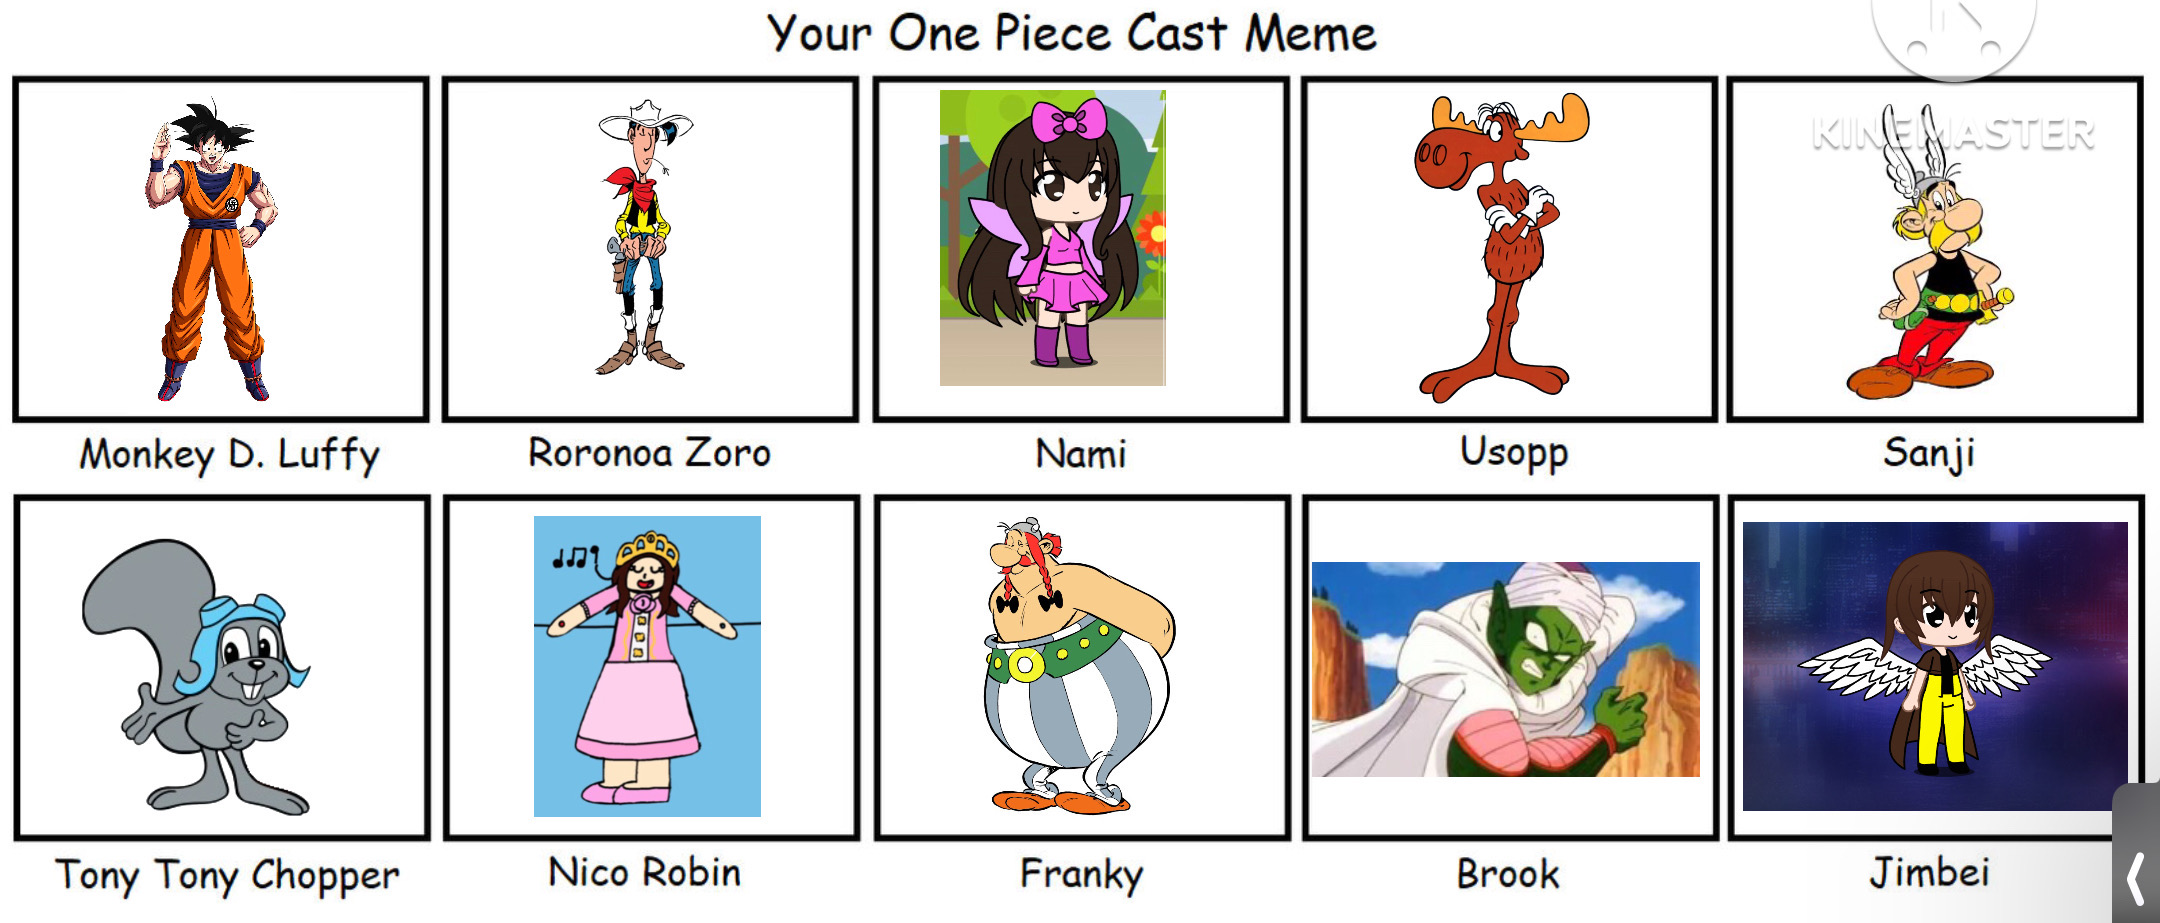 My One Piece Cast Meme by Tara012 on DeviantArt